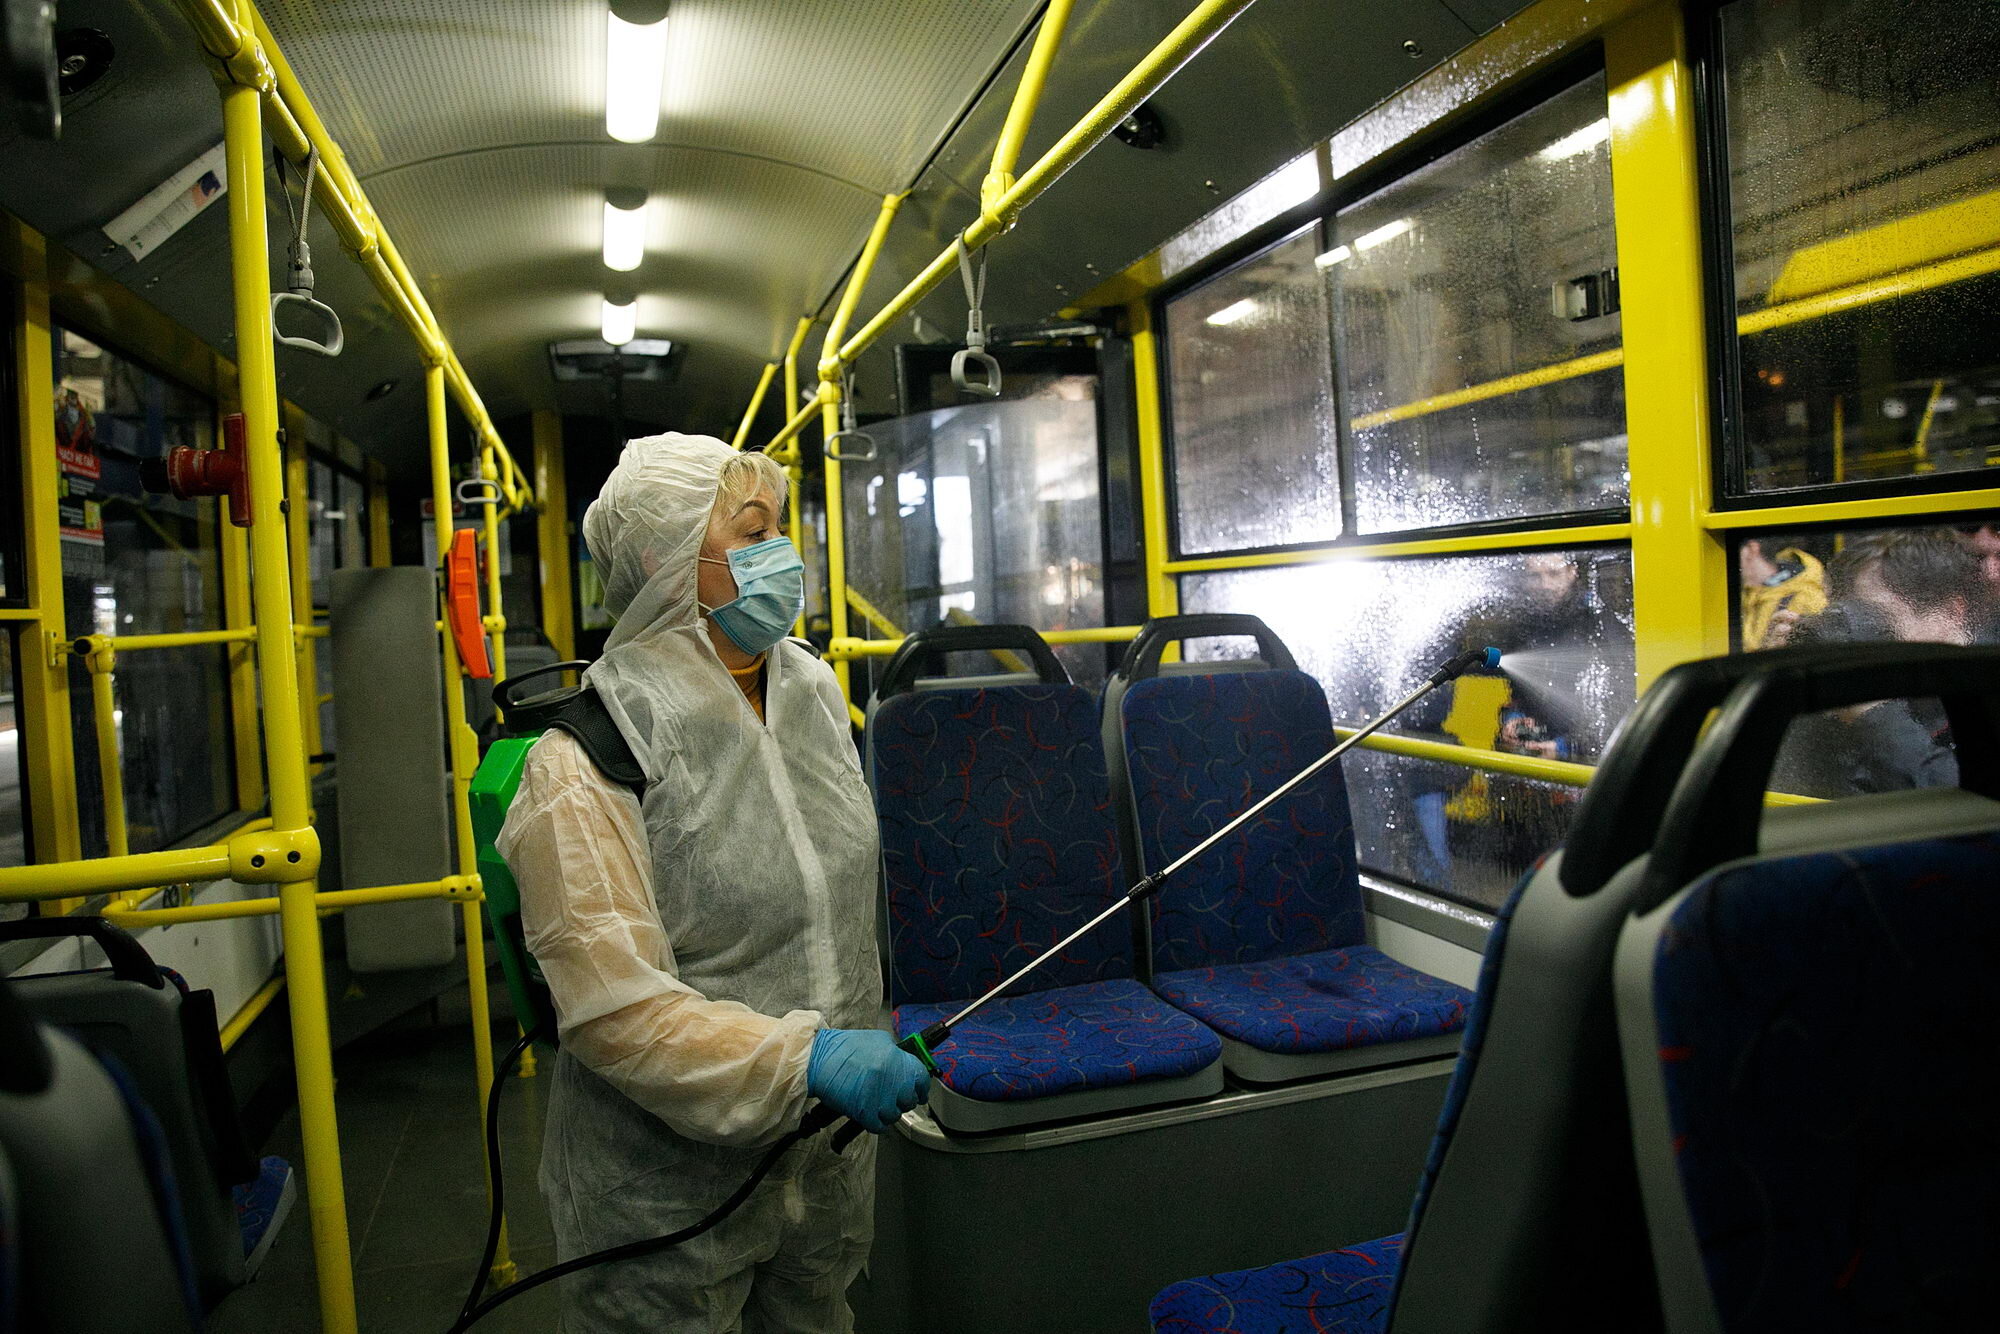 BREAKING: First death from coronavirus in Ukraine confirmed | KyivPost - Ukraine's Global Voice